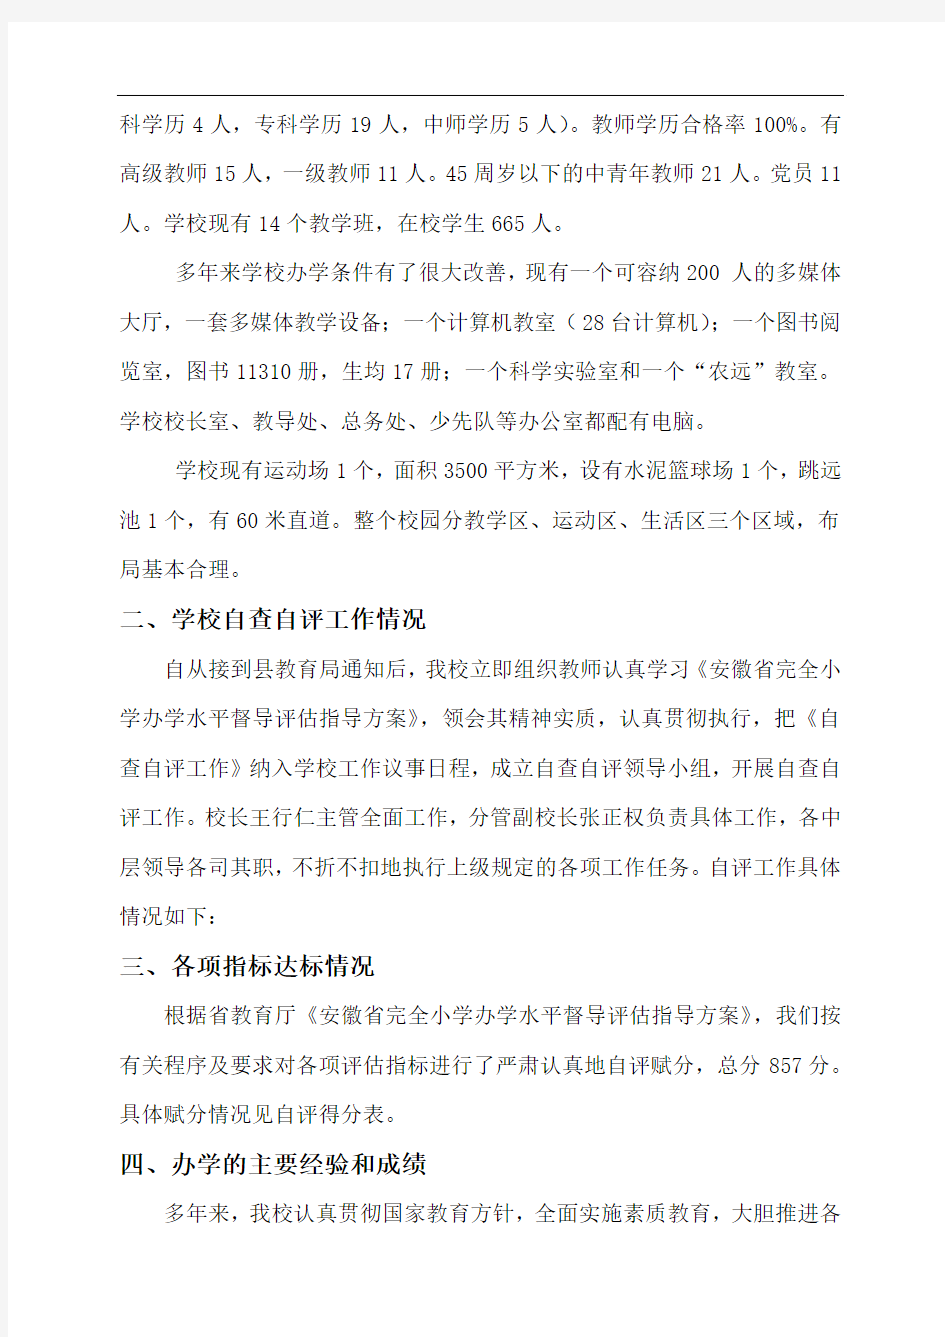 bi-jdukx凤阳县李二庄中心小学办学水平督导评估自查报告